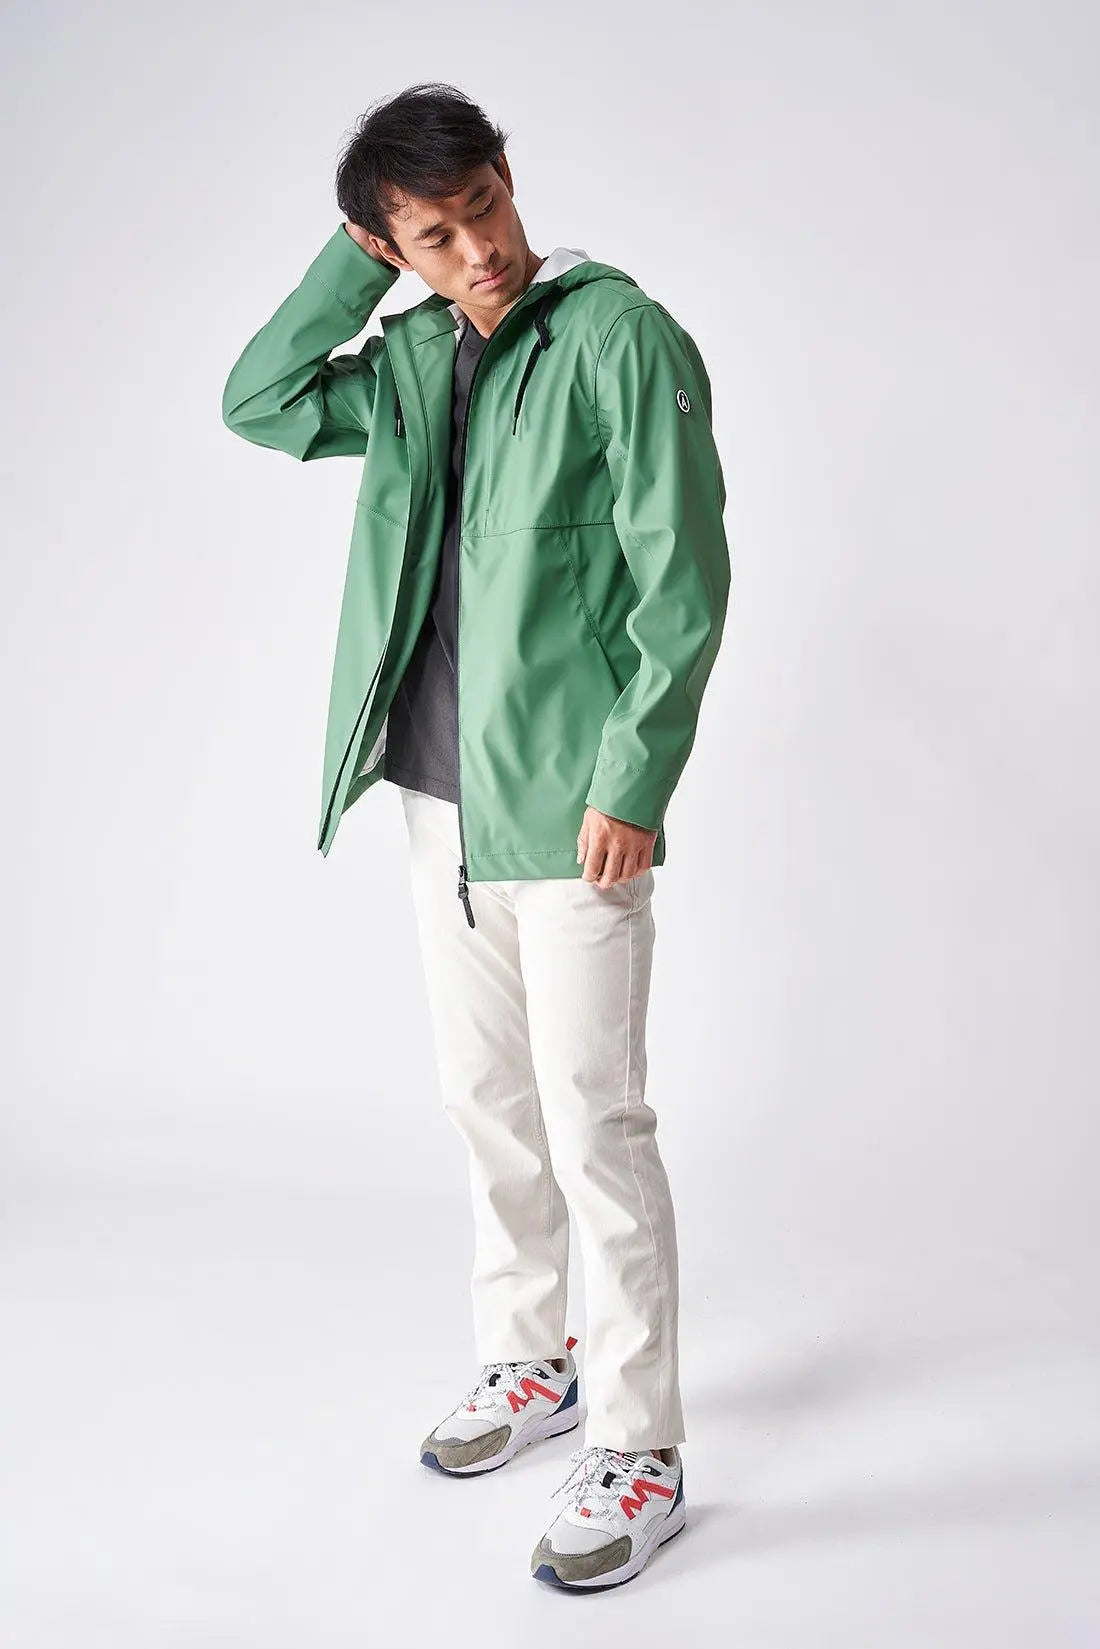 chaqueta verde militar 6 www. – DE CHARCO EN CHARCO